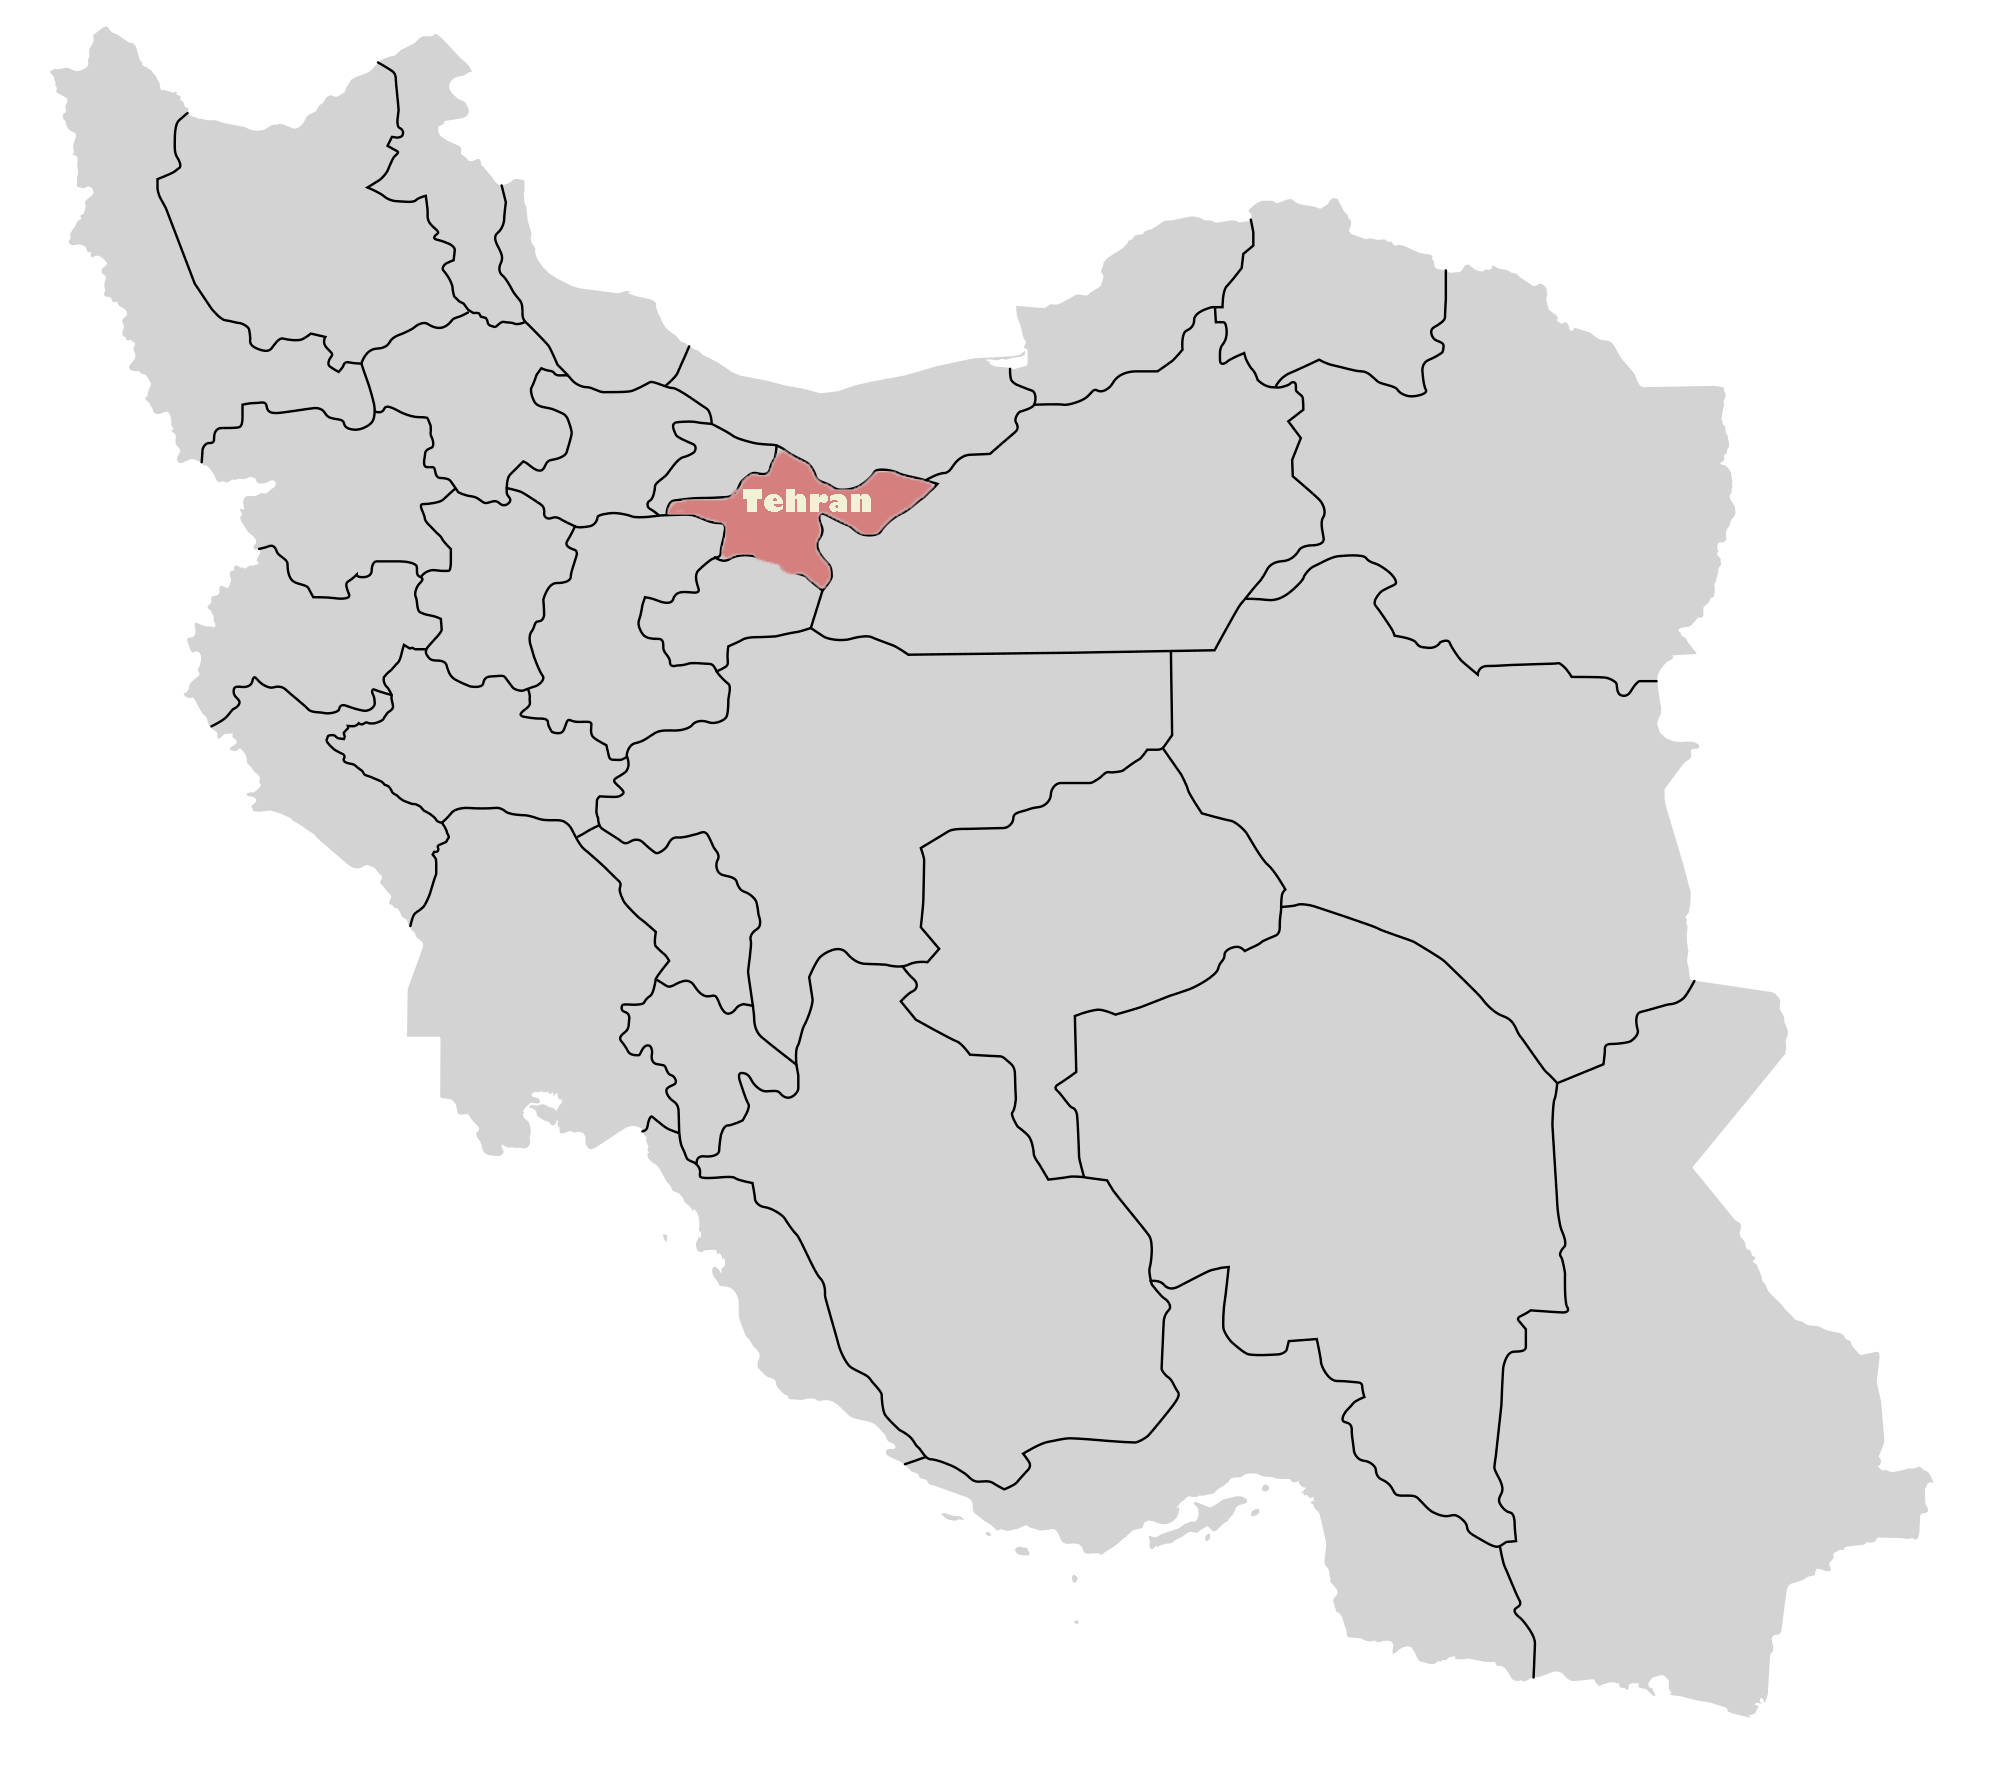 Tehran on Map